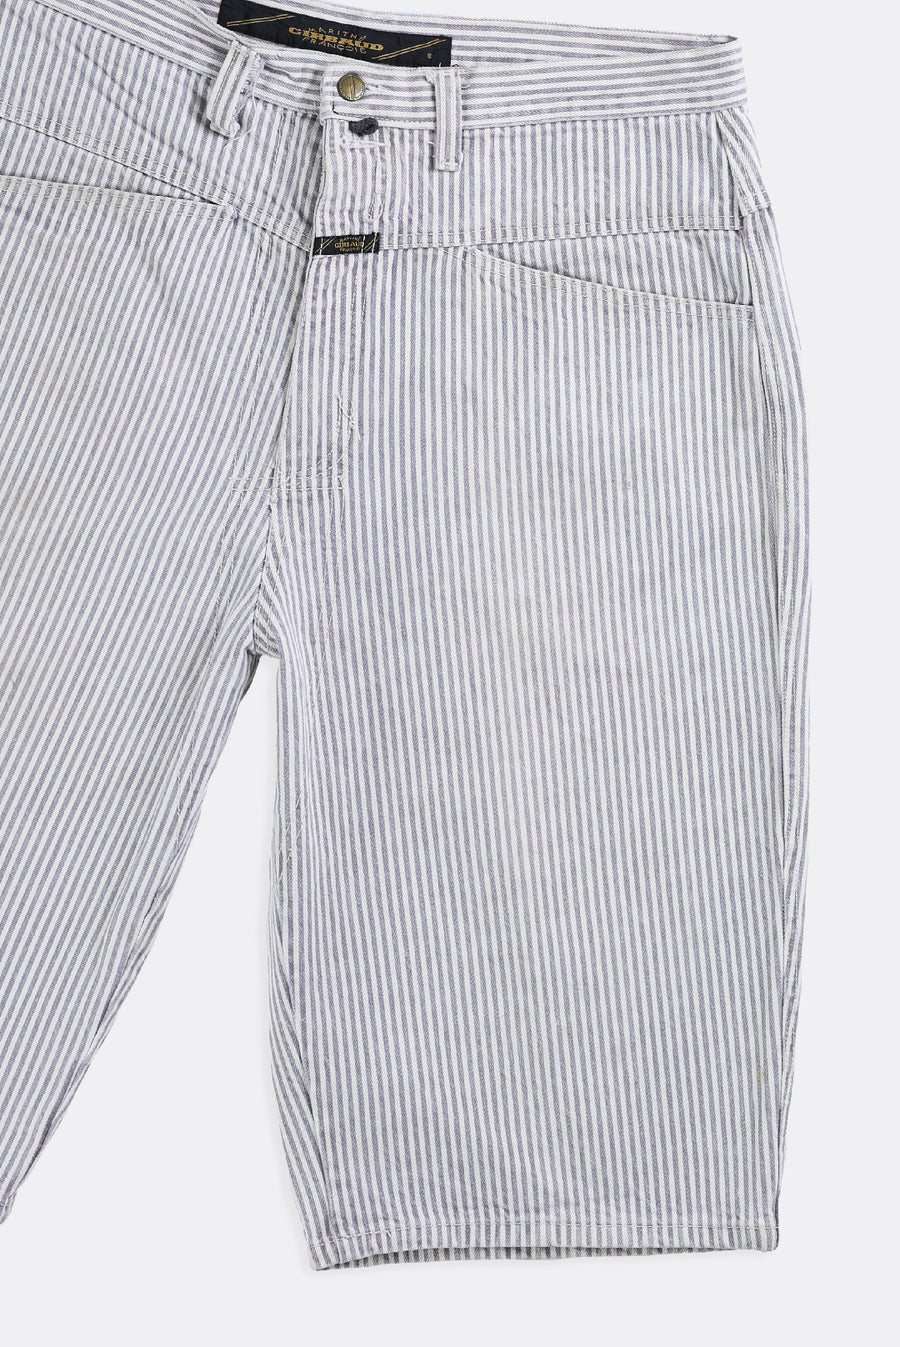 Vintage Girbaud Denim Shorts - W36